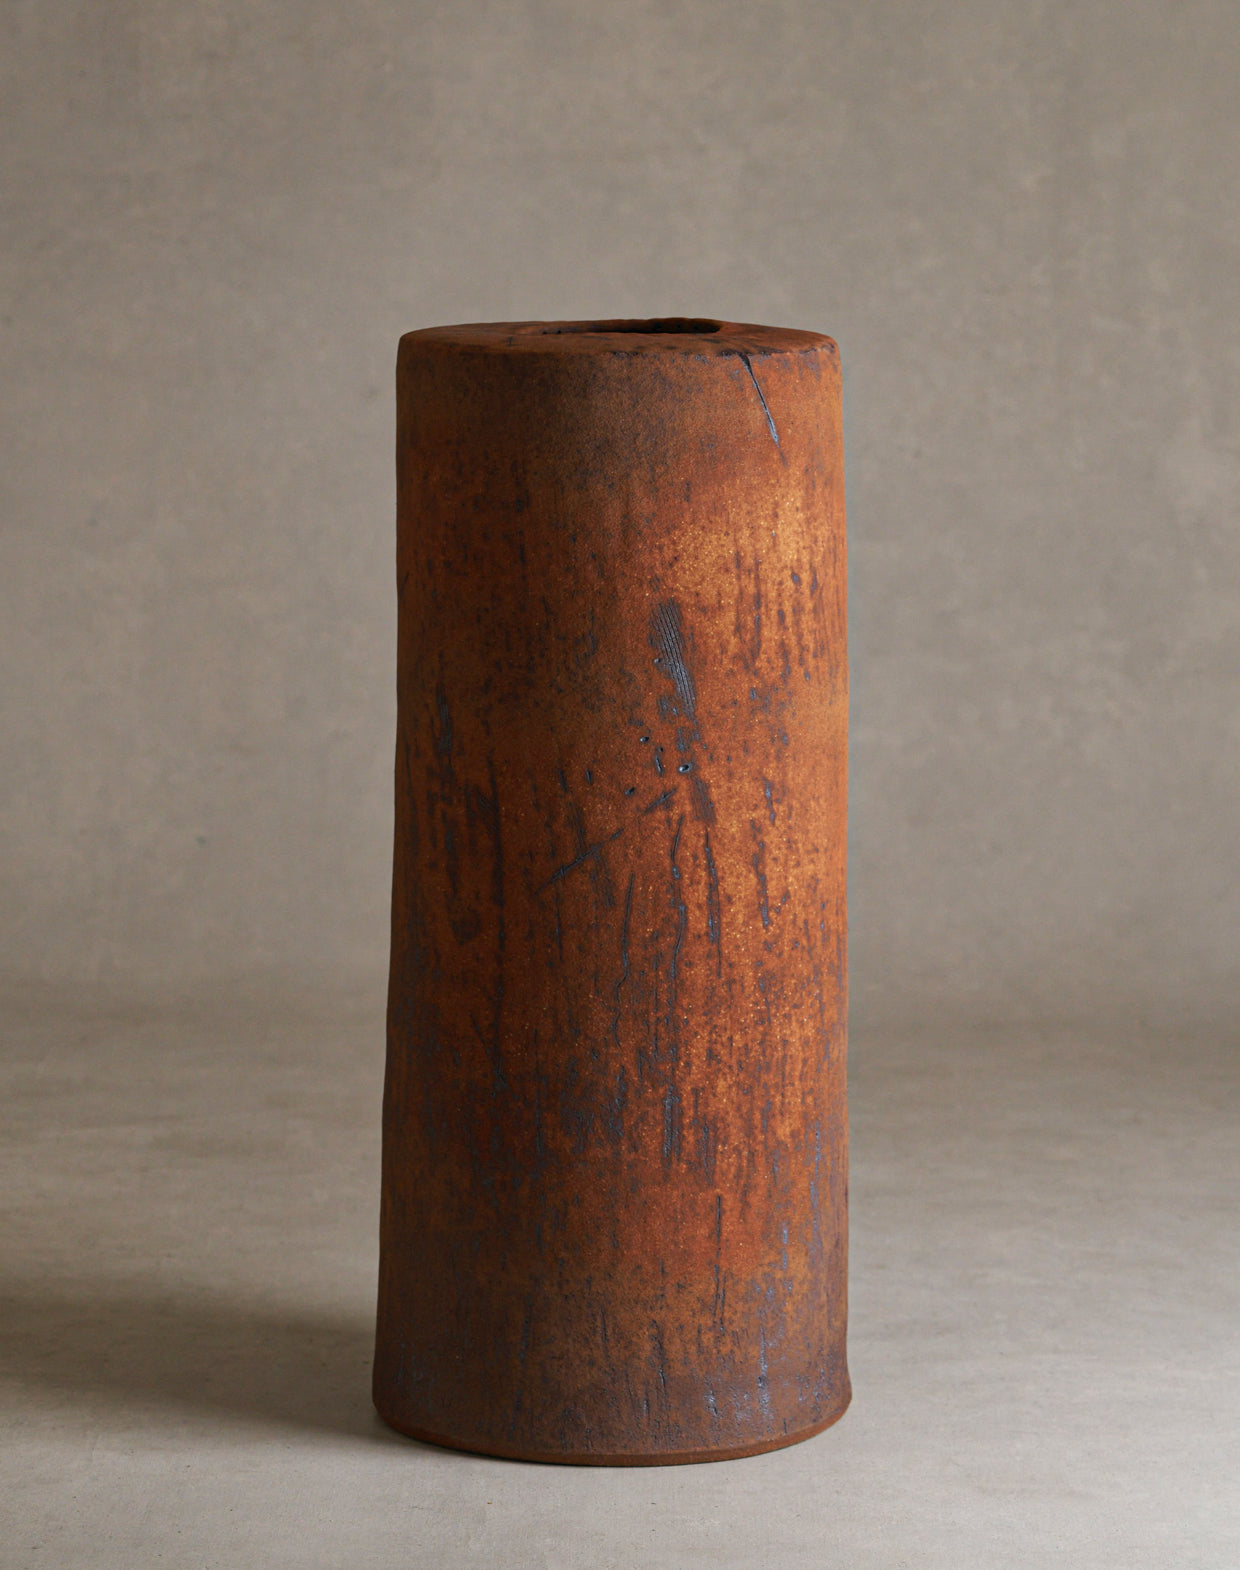 Rick Hintze Coiled Stoneware Vessel, "Untitled" No. 14